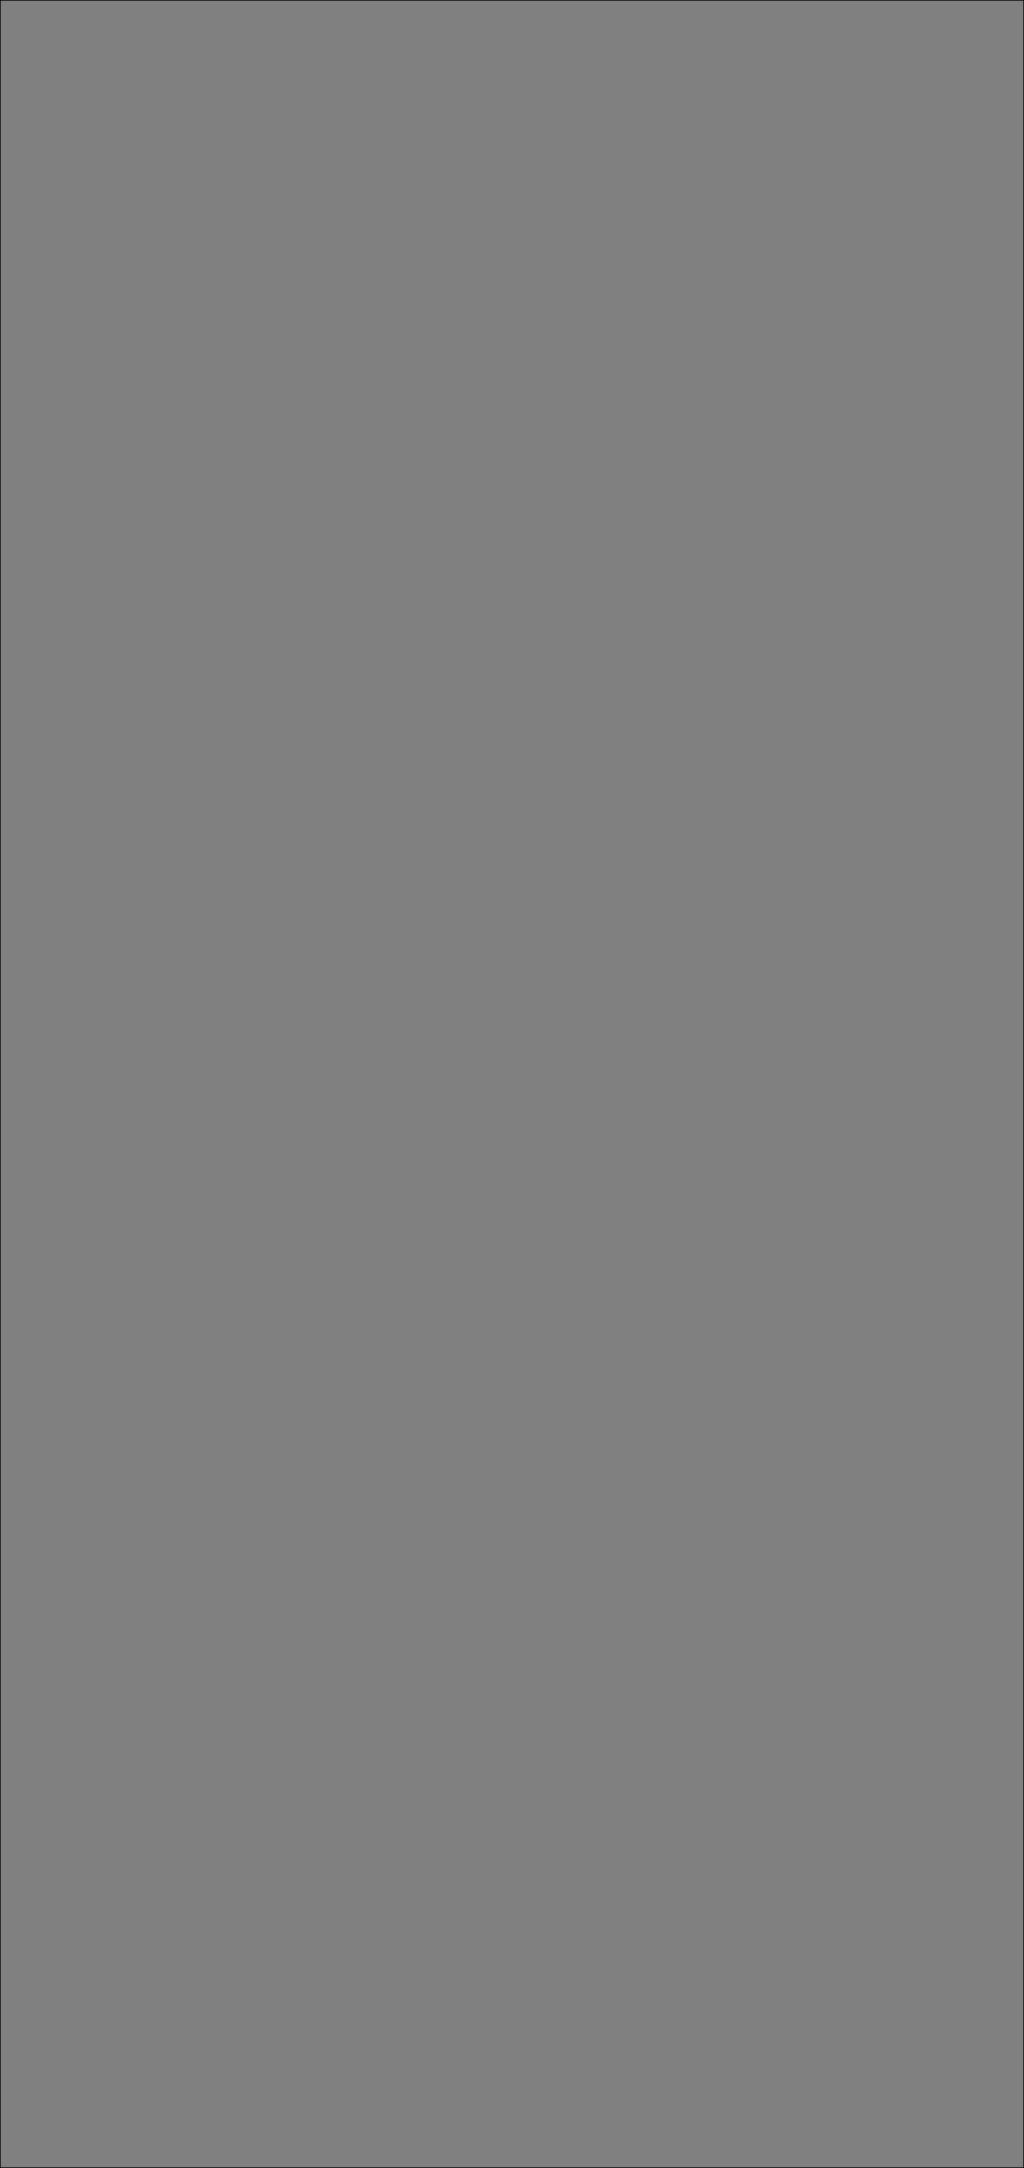 QCC Wanderer Bundaberg State Rally ~ October/November 2018 Page 11 Winners: Disc Bowls Statistics CCQ State Rally Bundaberg 2018 Skip: Ian Aland Lead: Barry Sawtell 7 Club: Jabiru Runners-Up Played